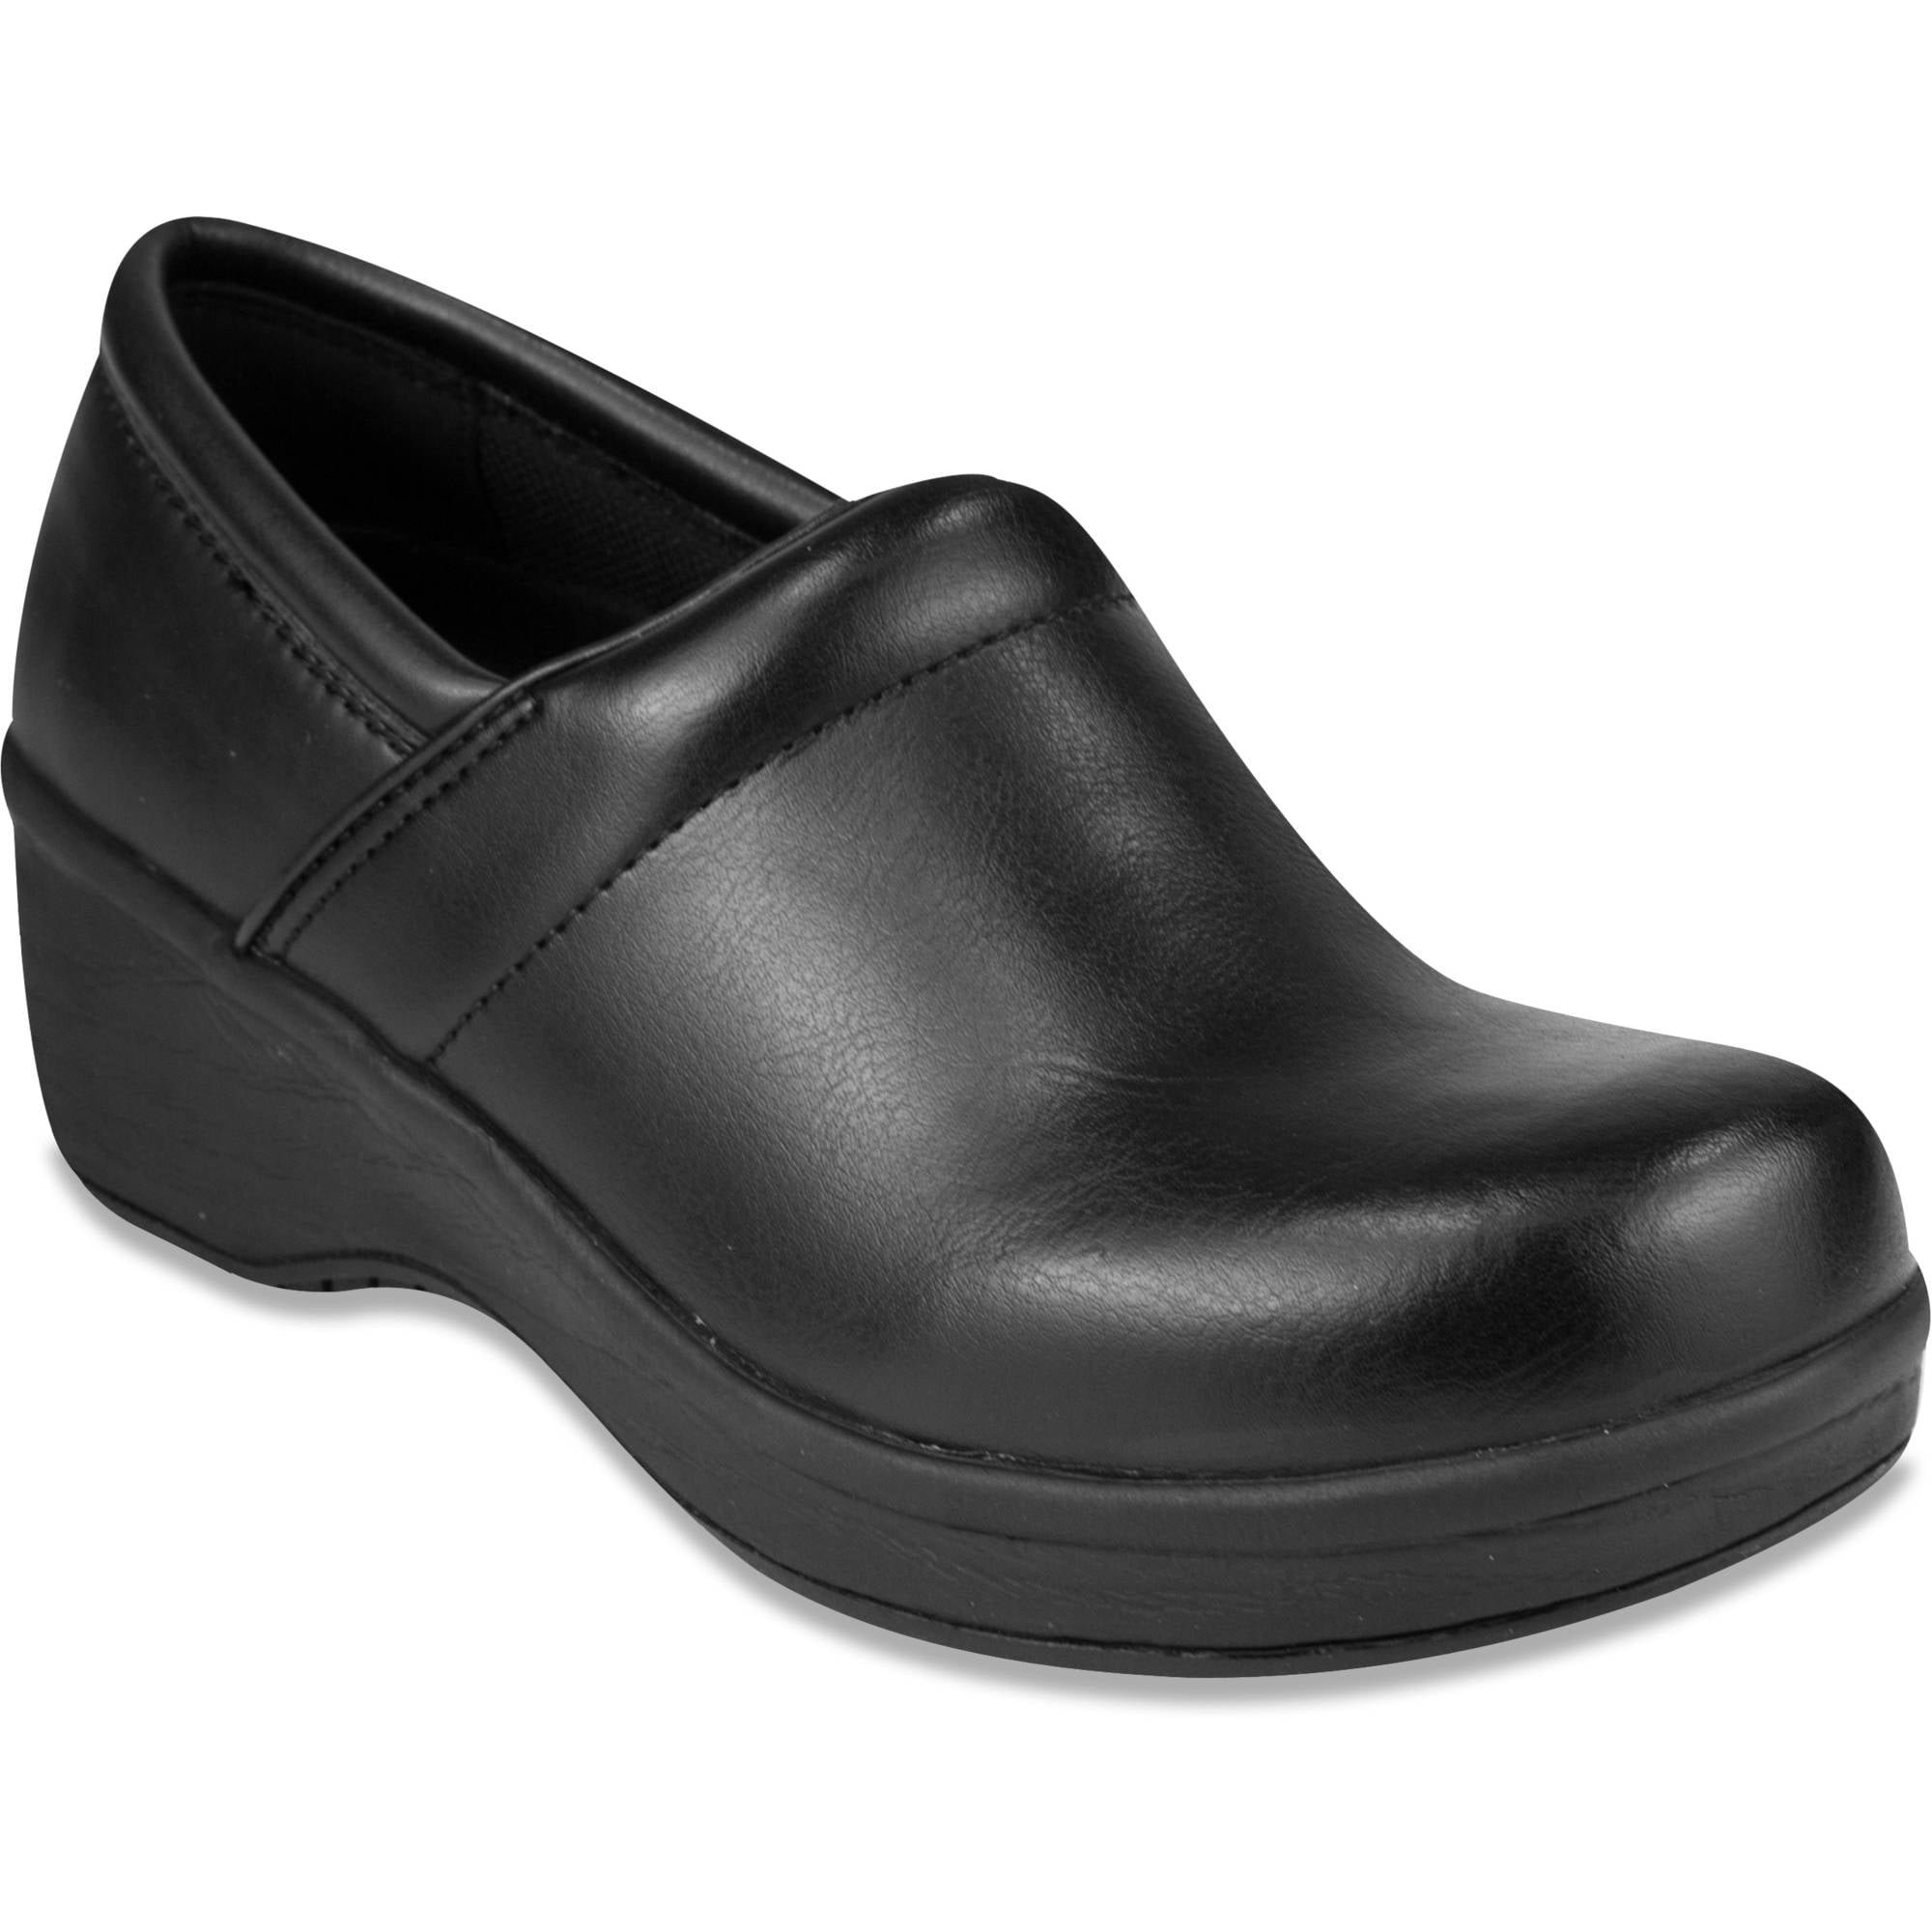 Black Slip Resistant Shoes - Walmart.com